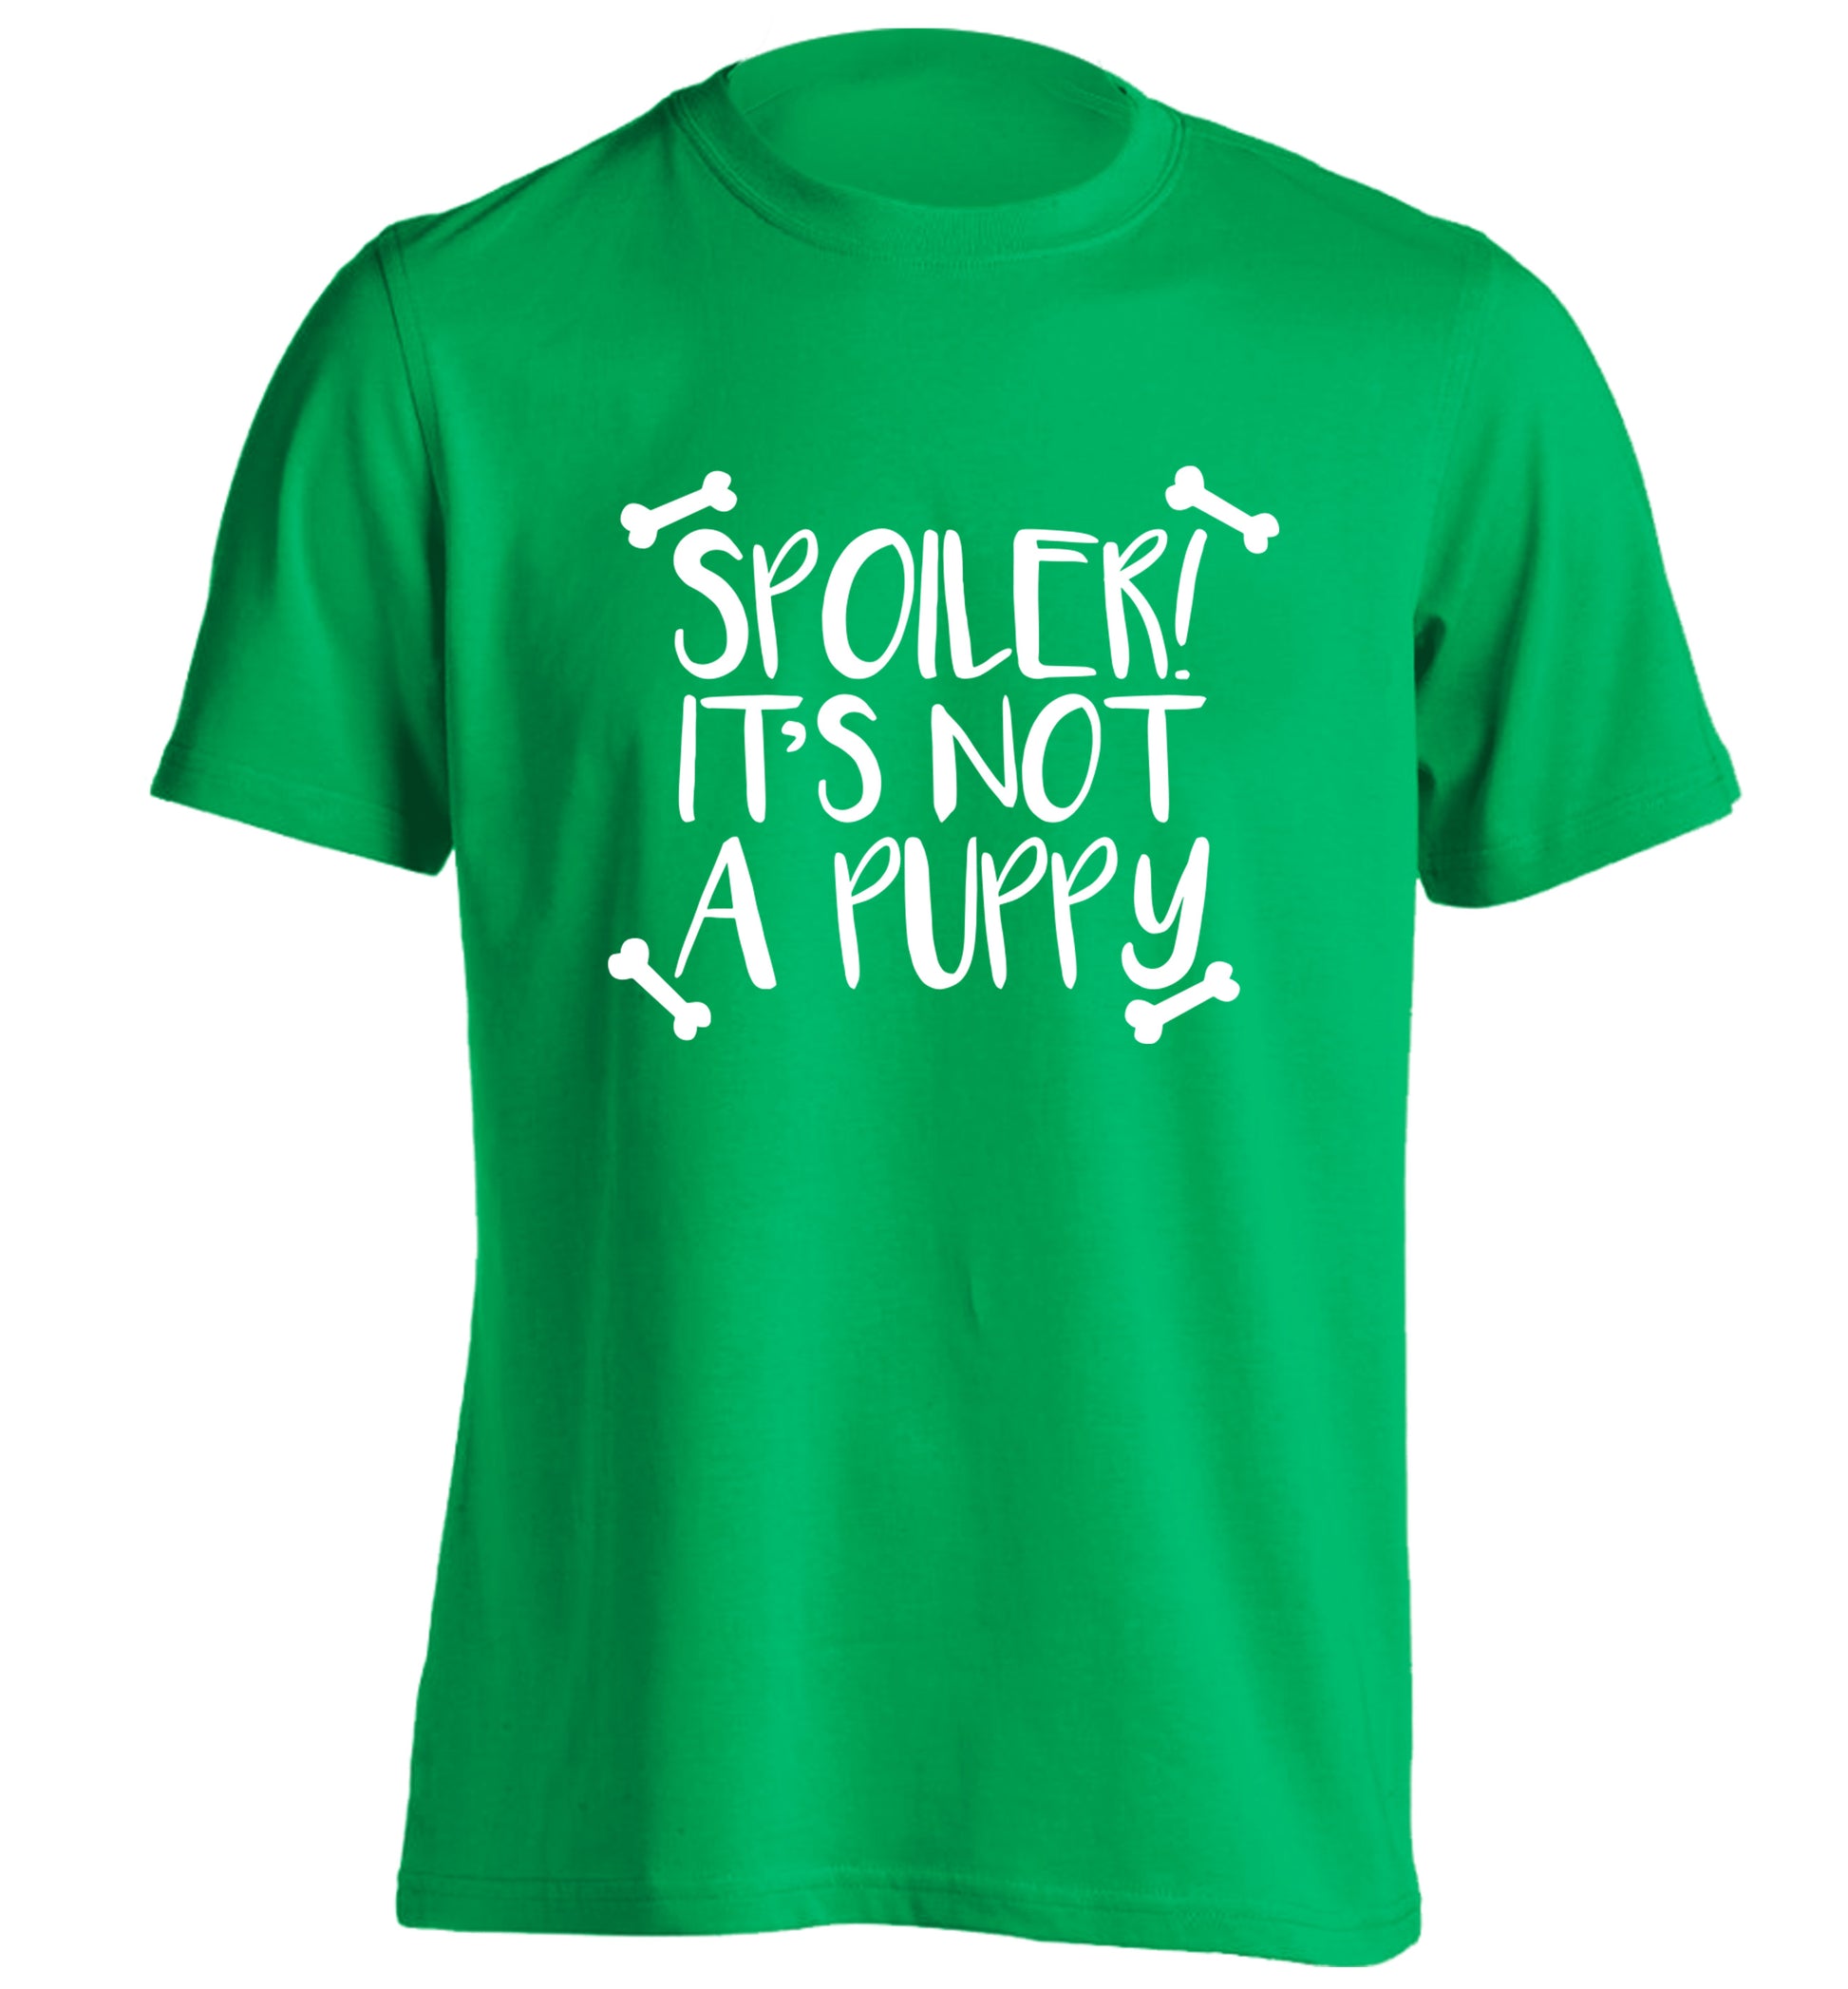 Spoiler it's not a puppy adults unisex green Tshirt 2XL